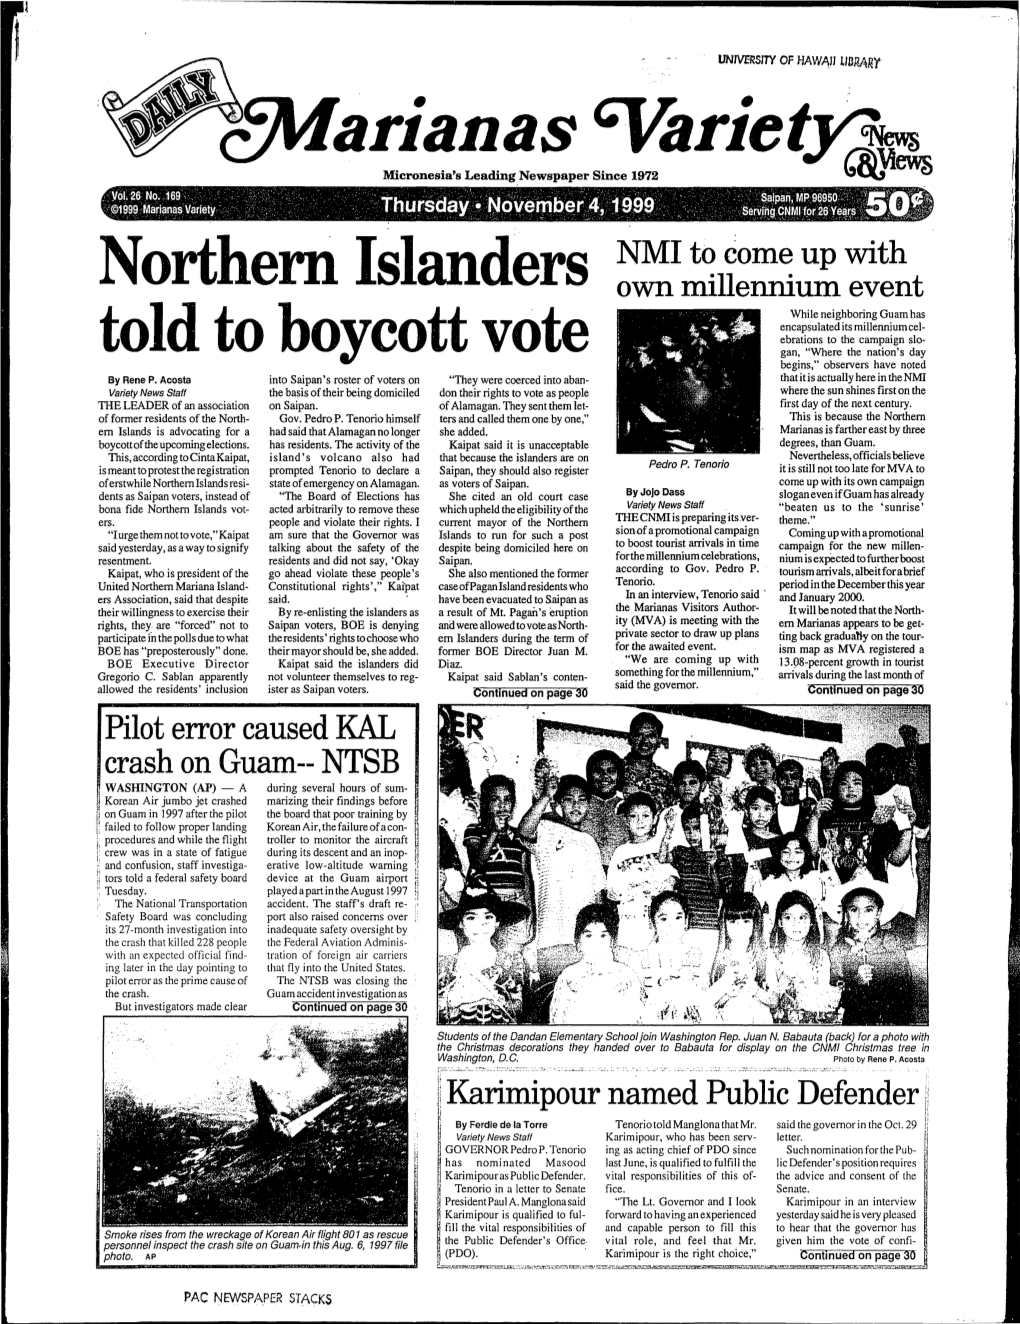 Northern Islanders Told to Boycott Vote